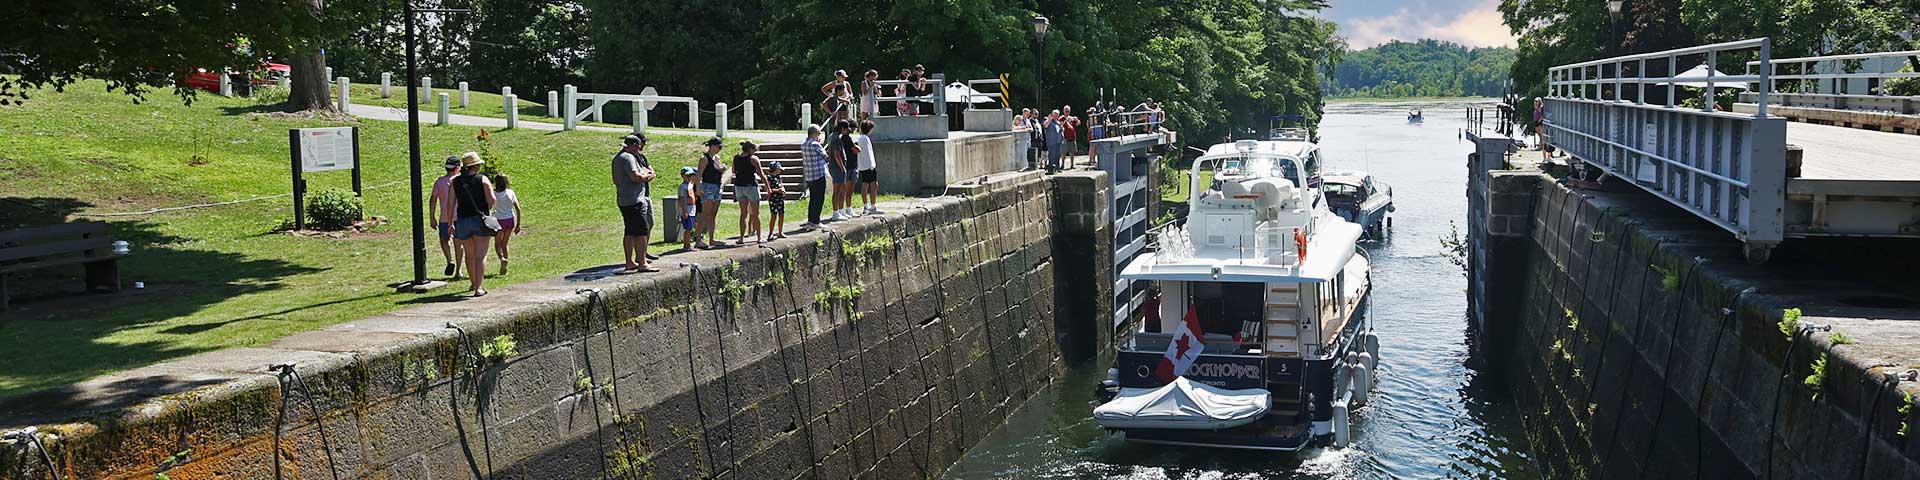 rideau canal cruises ottawa to kingston